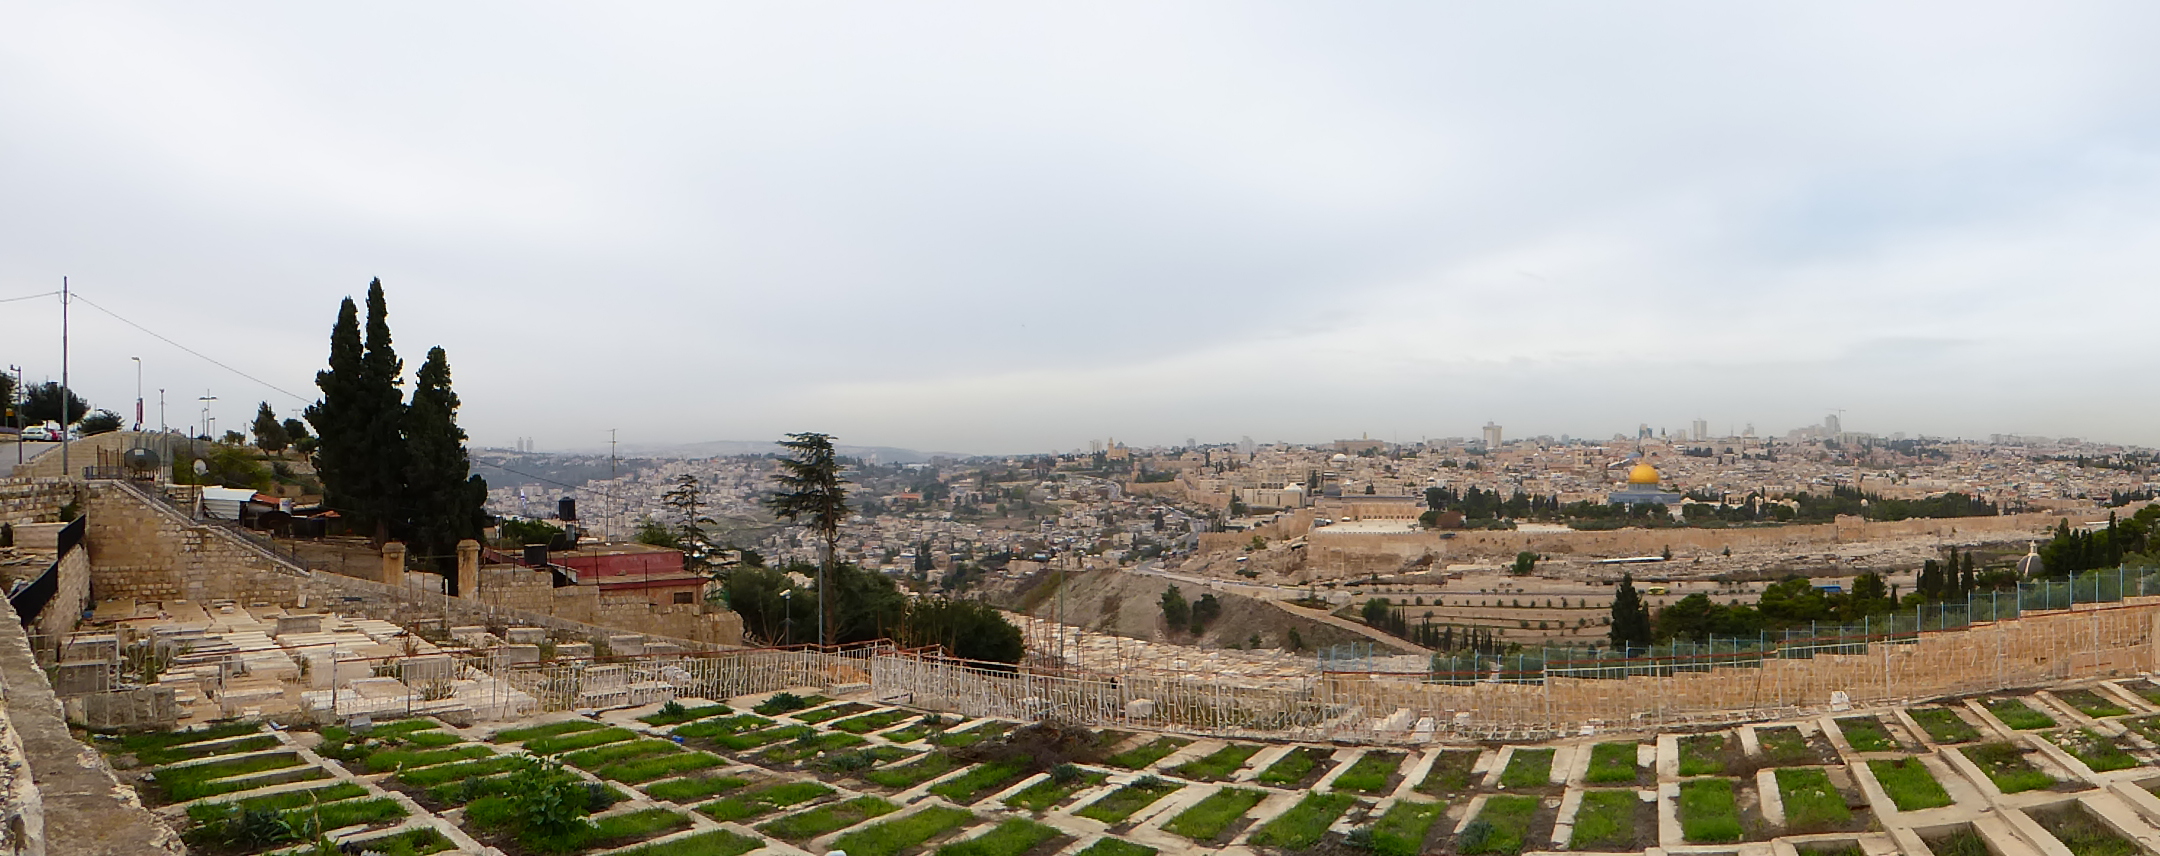 Blick vom Ölberg auf Jerusalem. In der Mitte die goldene Kuppel des Felsendoms